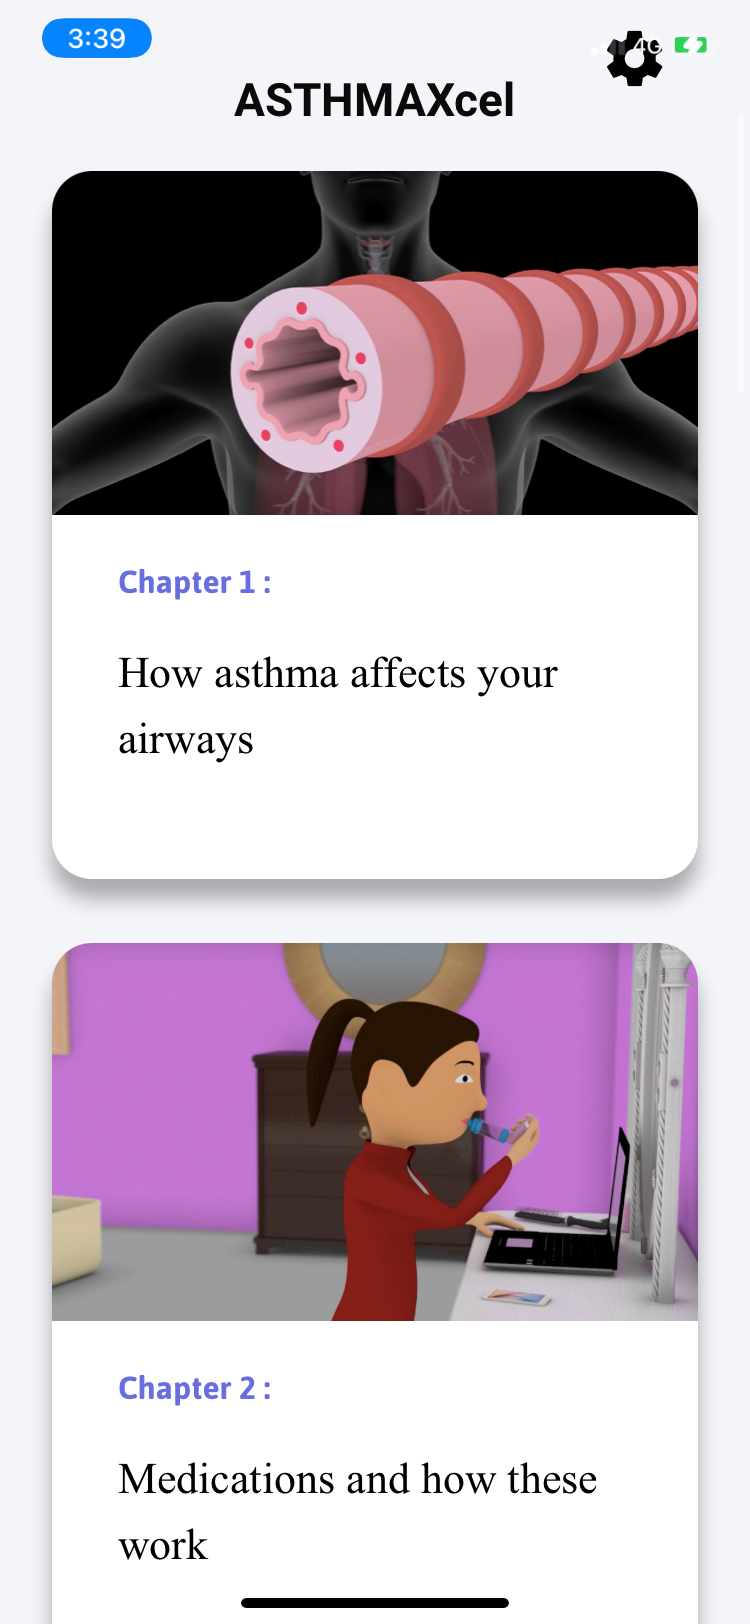 ASTHMAXcel homepage